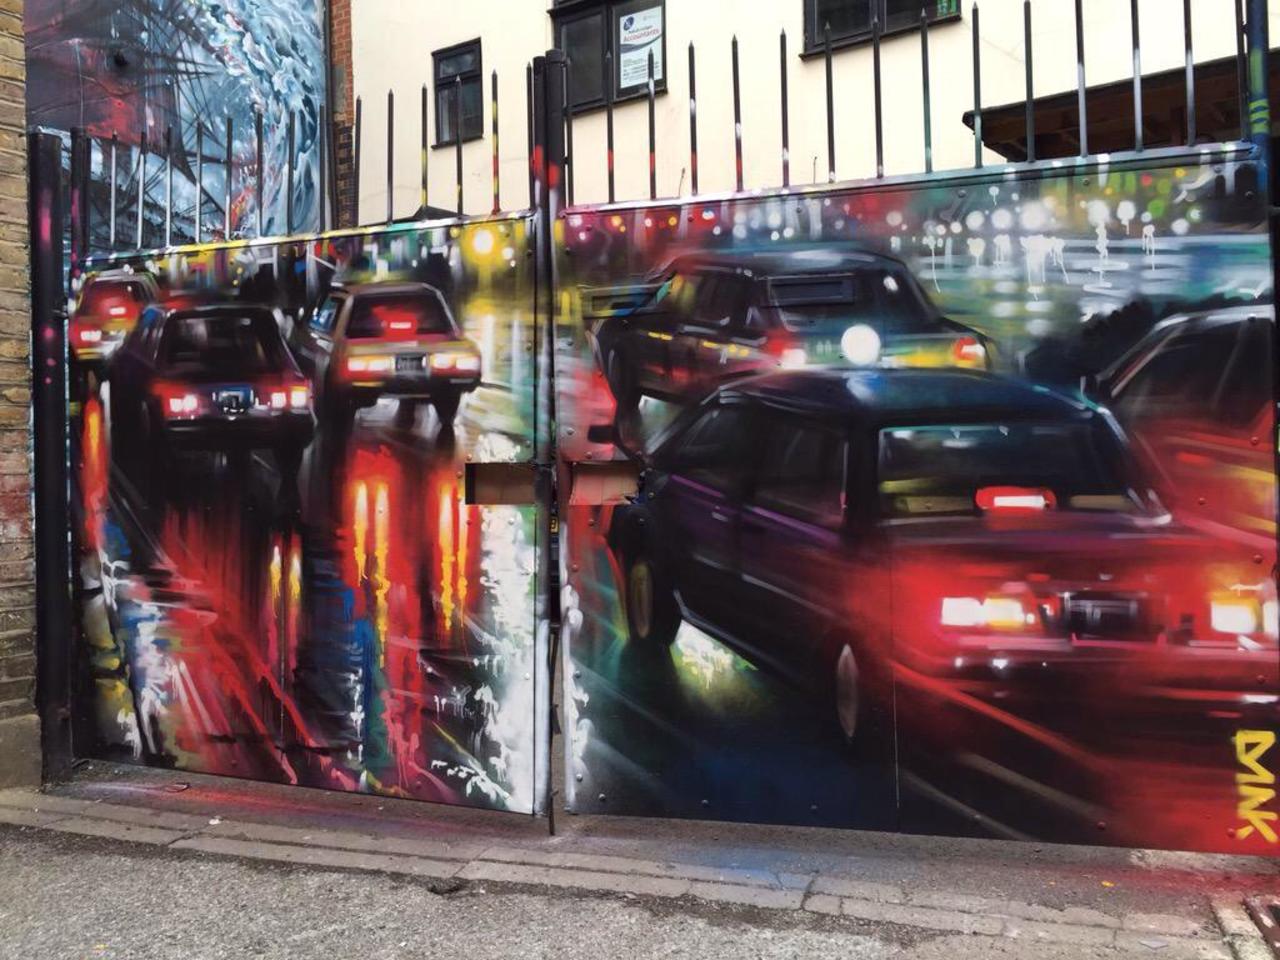 New Street Art by DanKitchener in Brick Lane London 

#art #graffiti #mural #streetart http://t.co/aPx48y0GmV